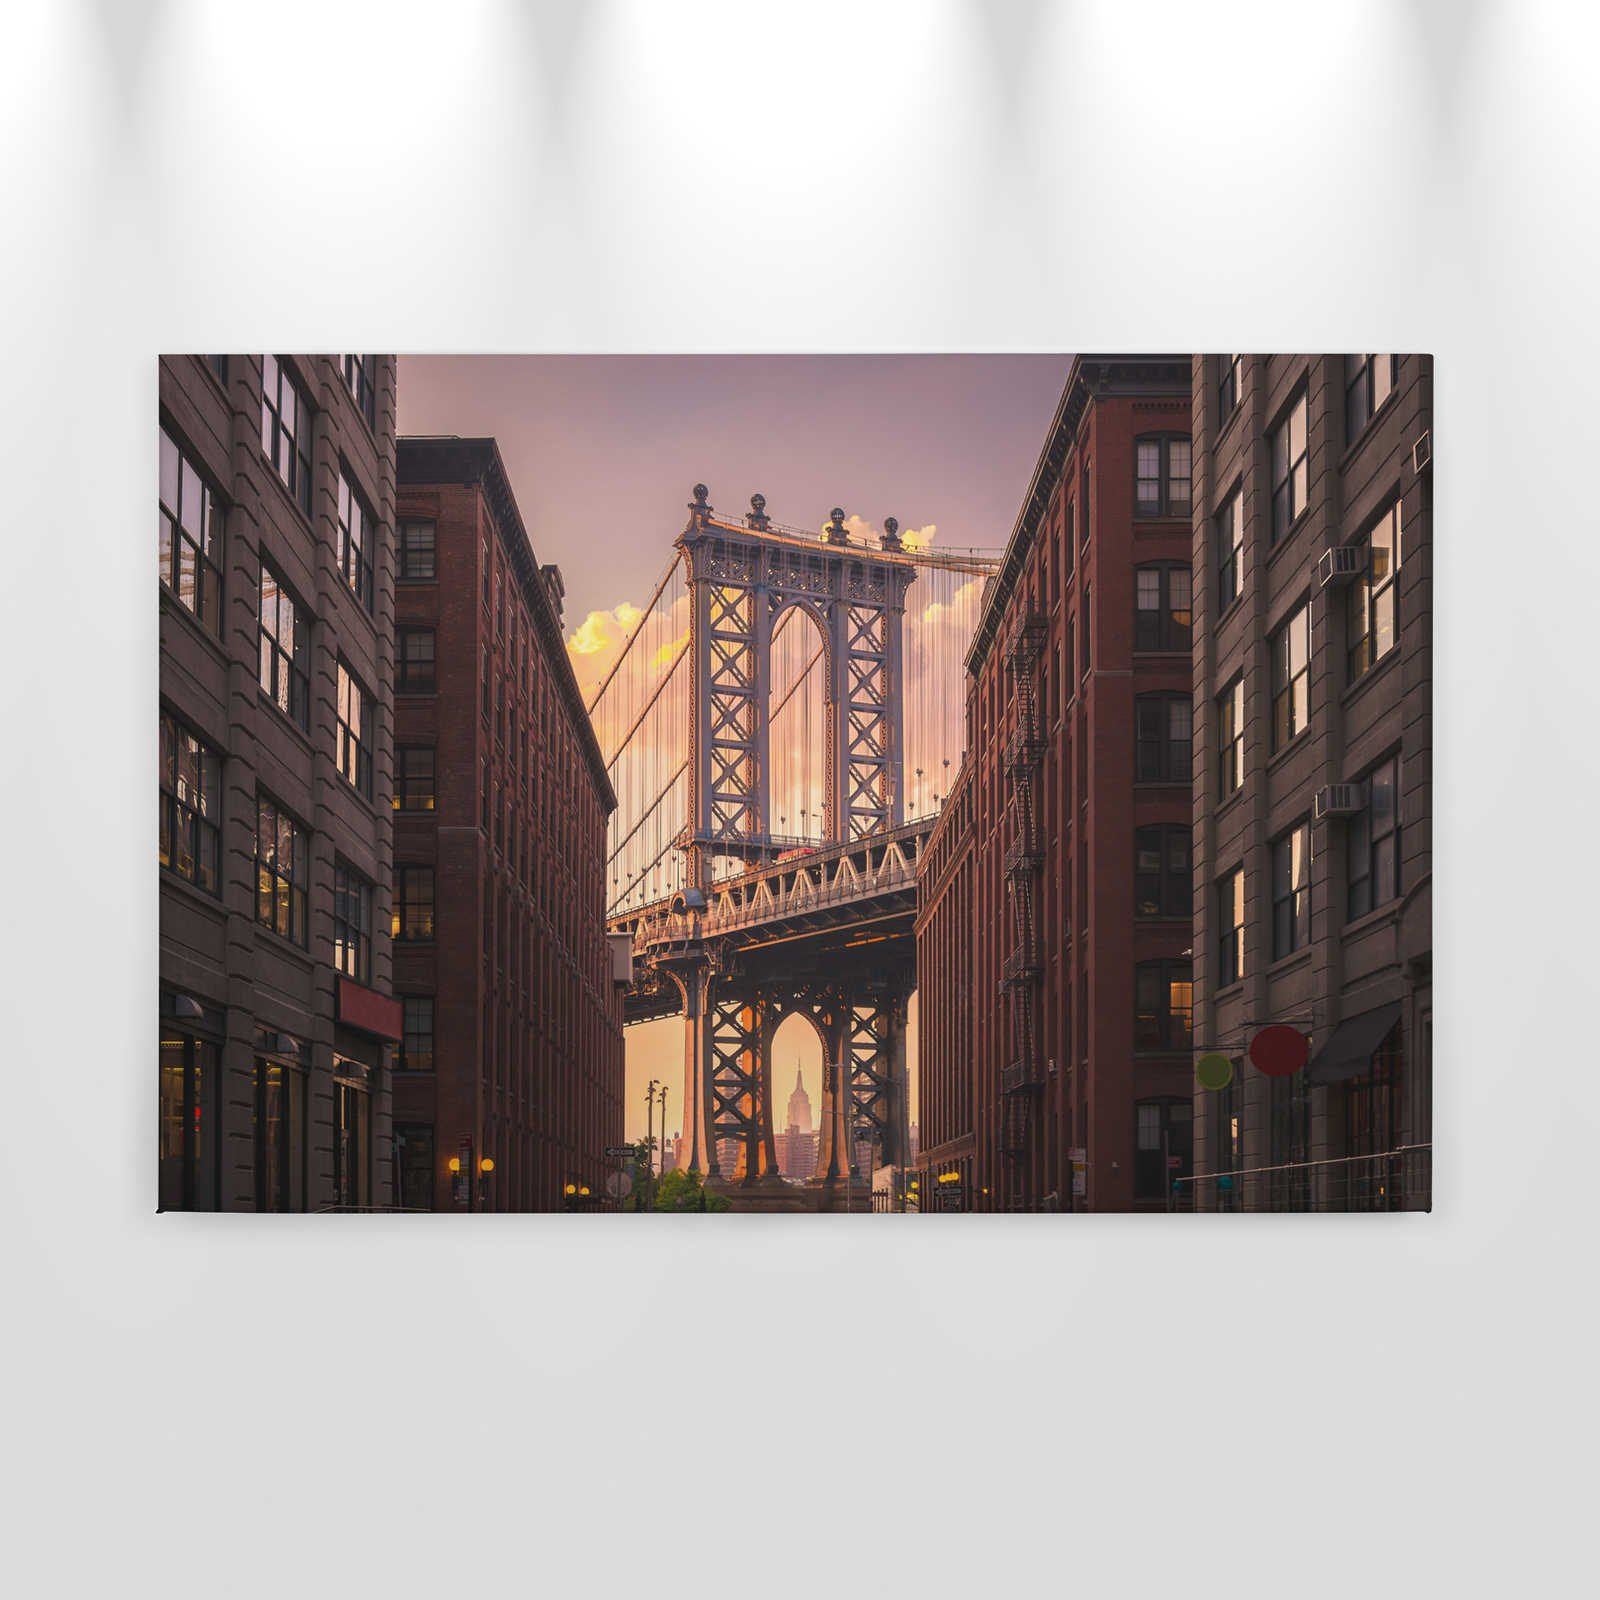             Lei Wall with Brooklyn Bridge from Street View - 0.90 m x 0.60 m
        